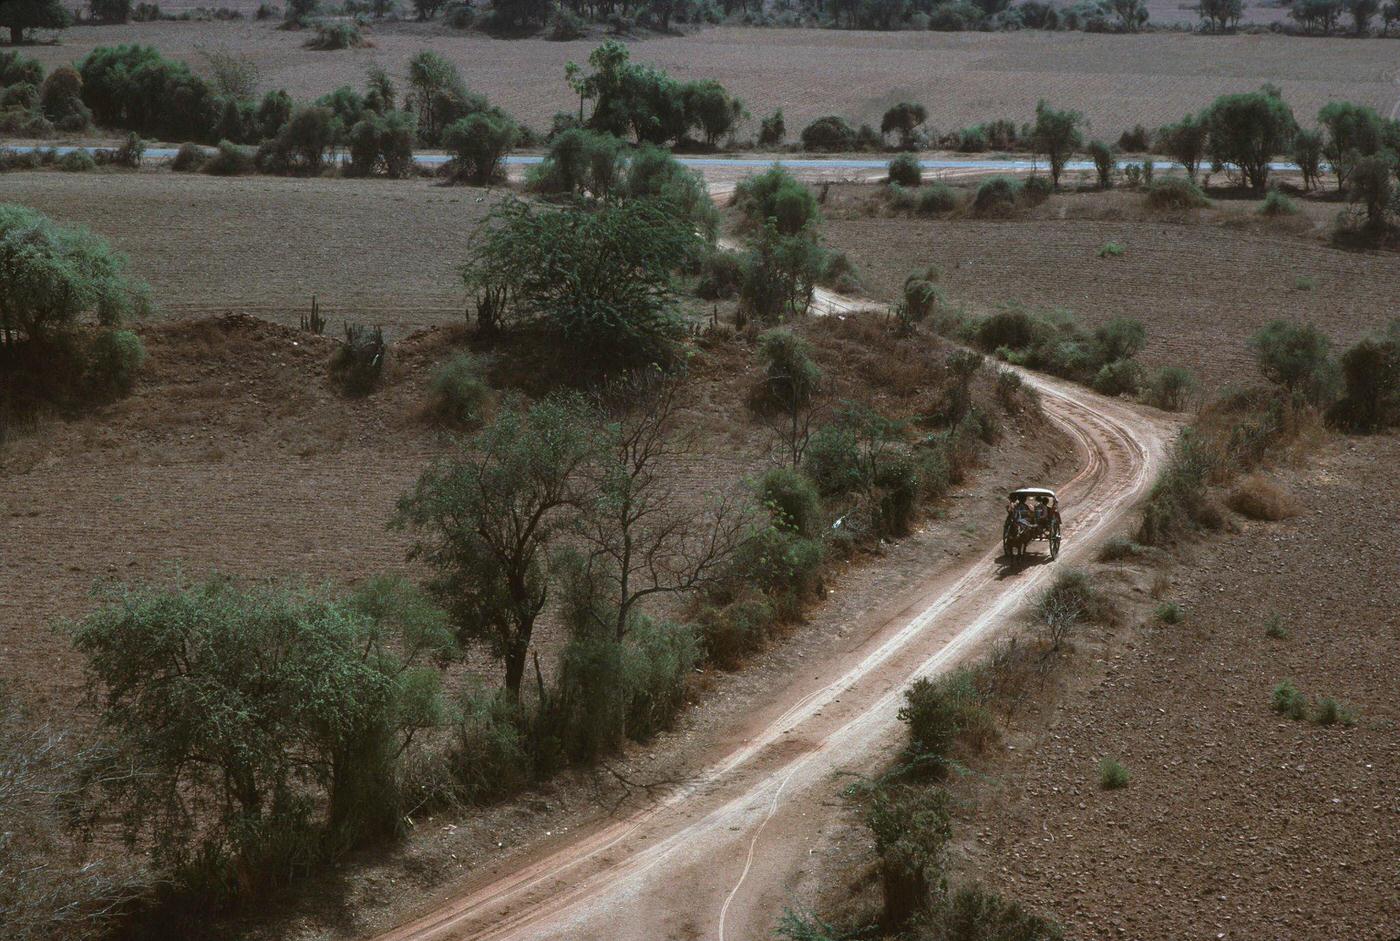 A Country Road in Pagan or Bagan, Burma, 1988